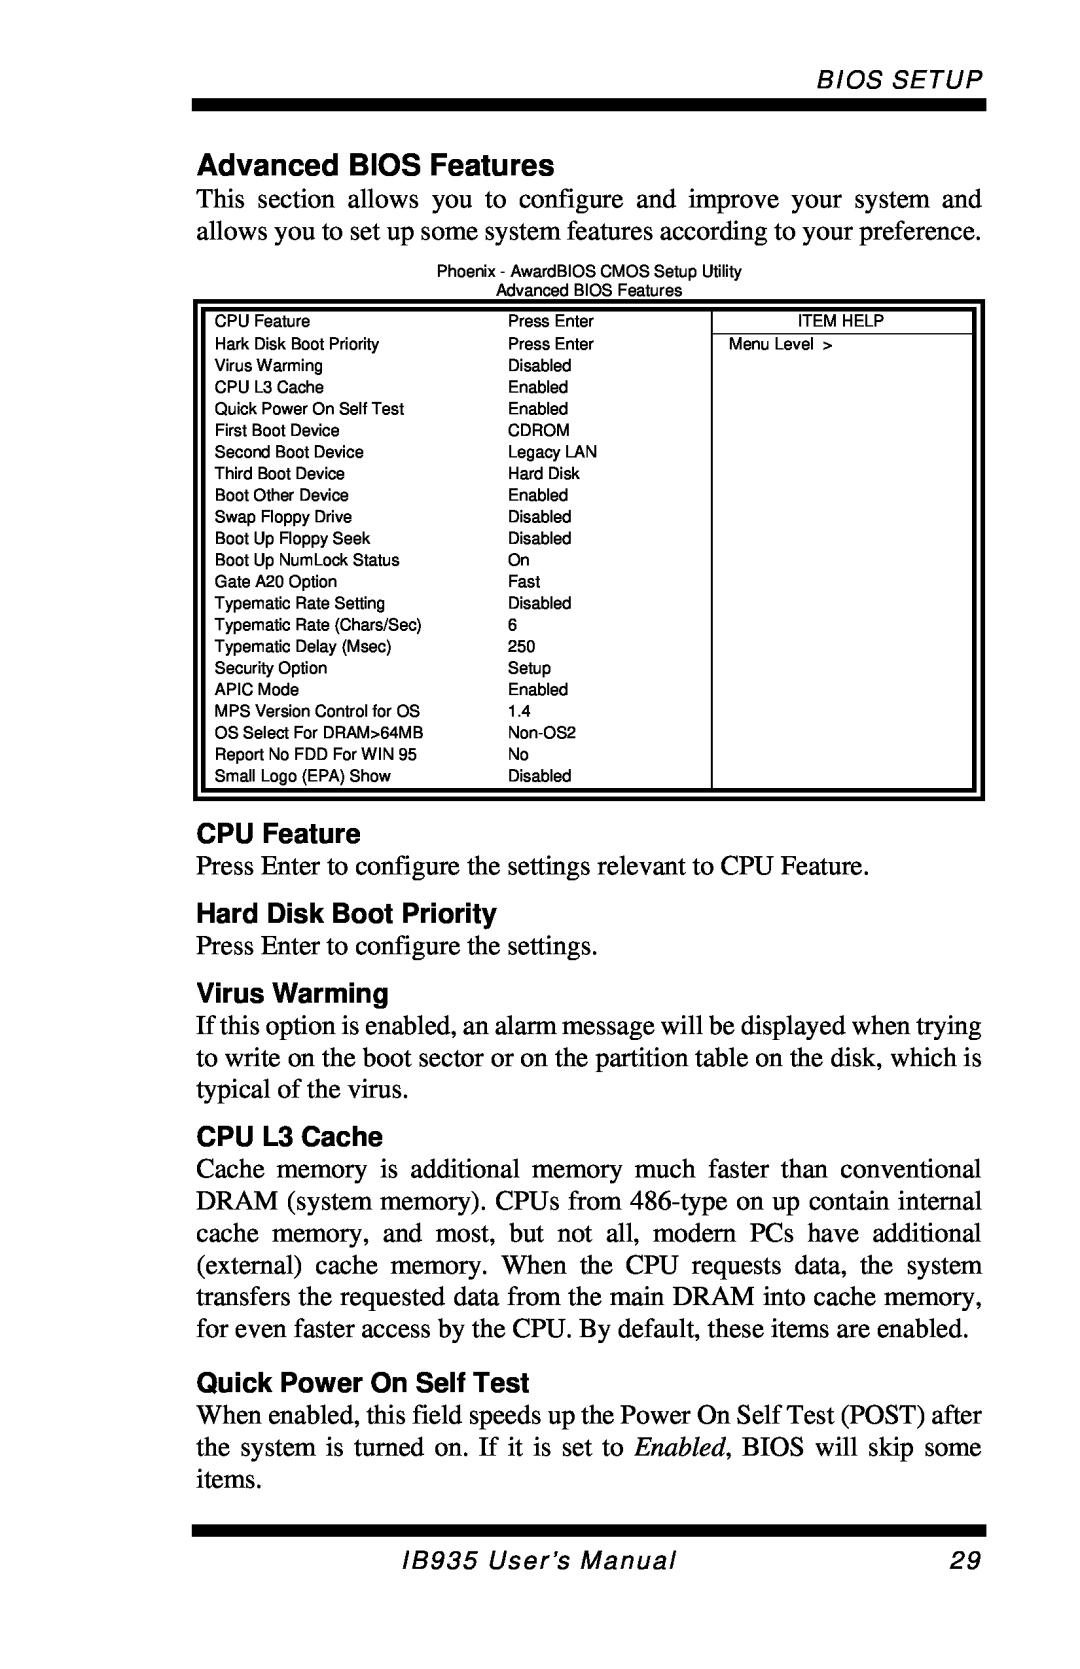 Intel IB935 user manual Advanced BIOS Features, CPU Feature, Hard Disk Boot Priority, Virus Warming, CPU L3 Cache 